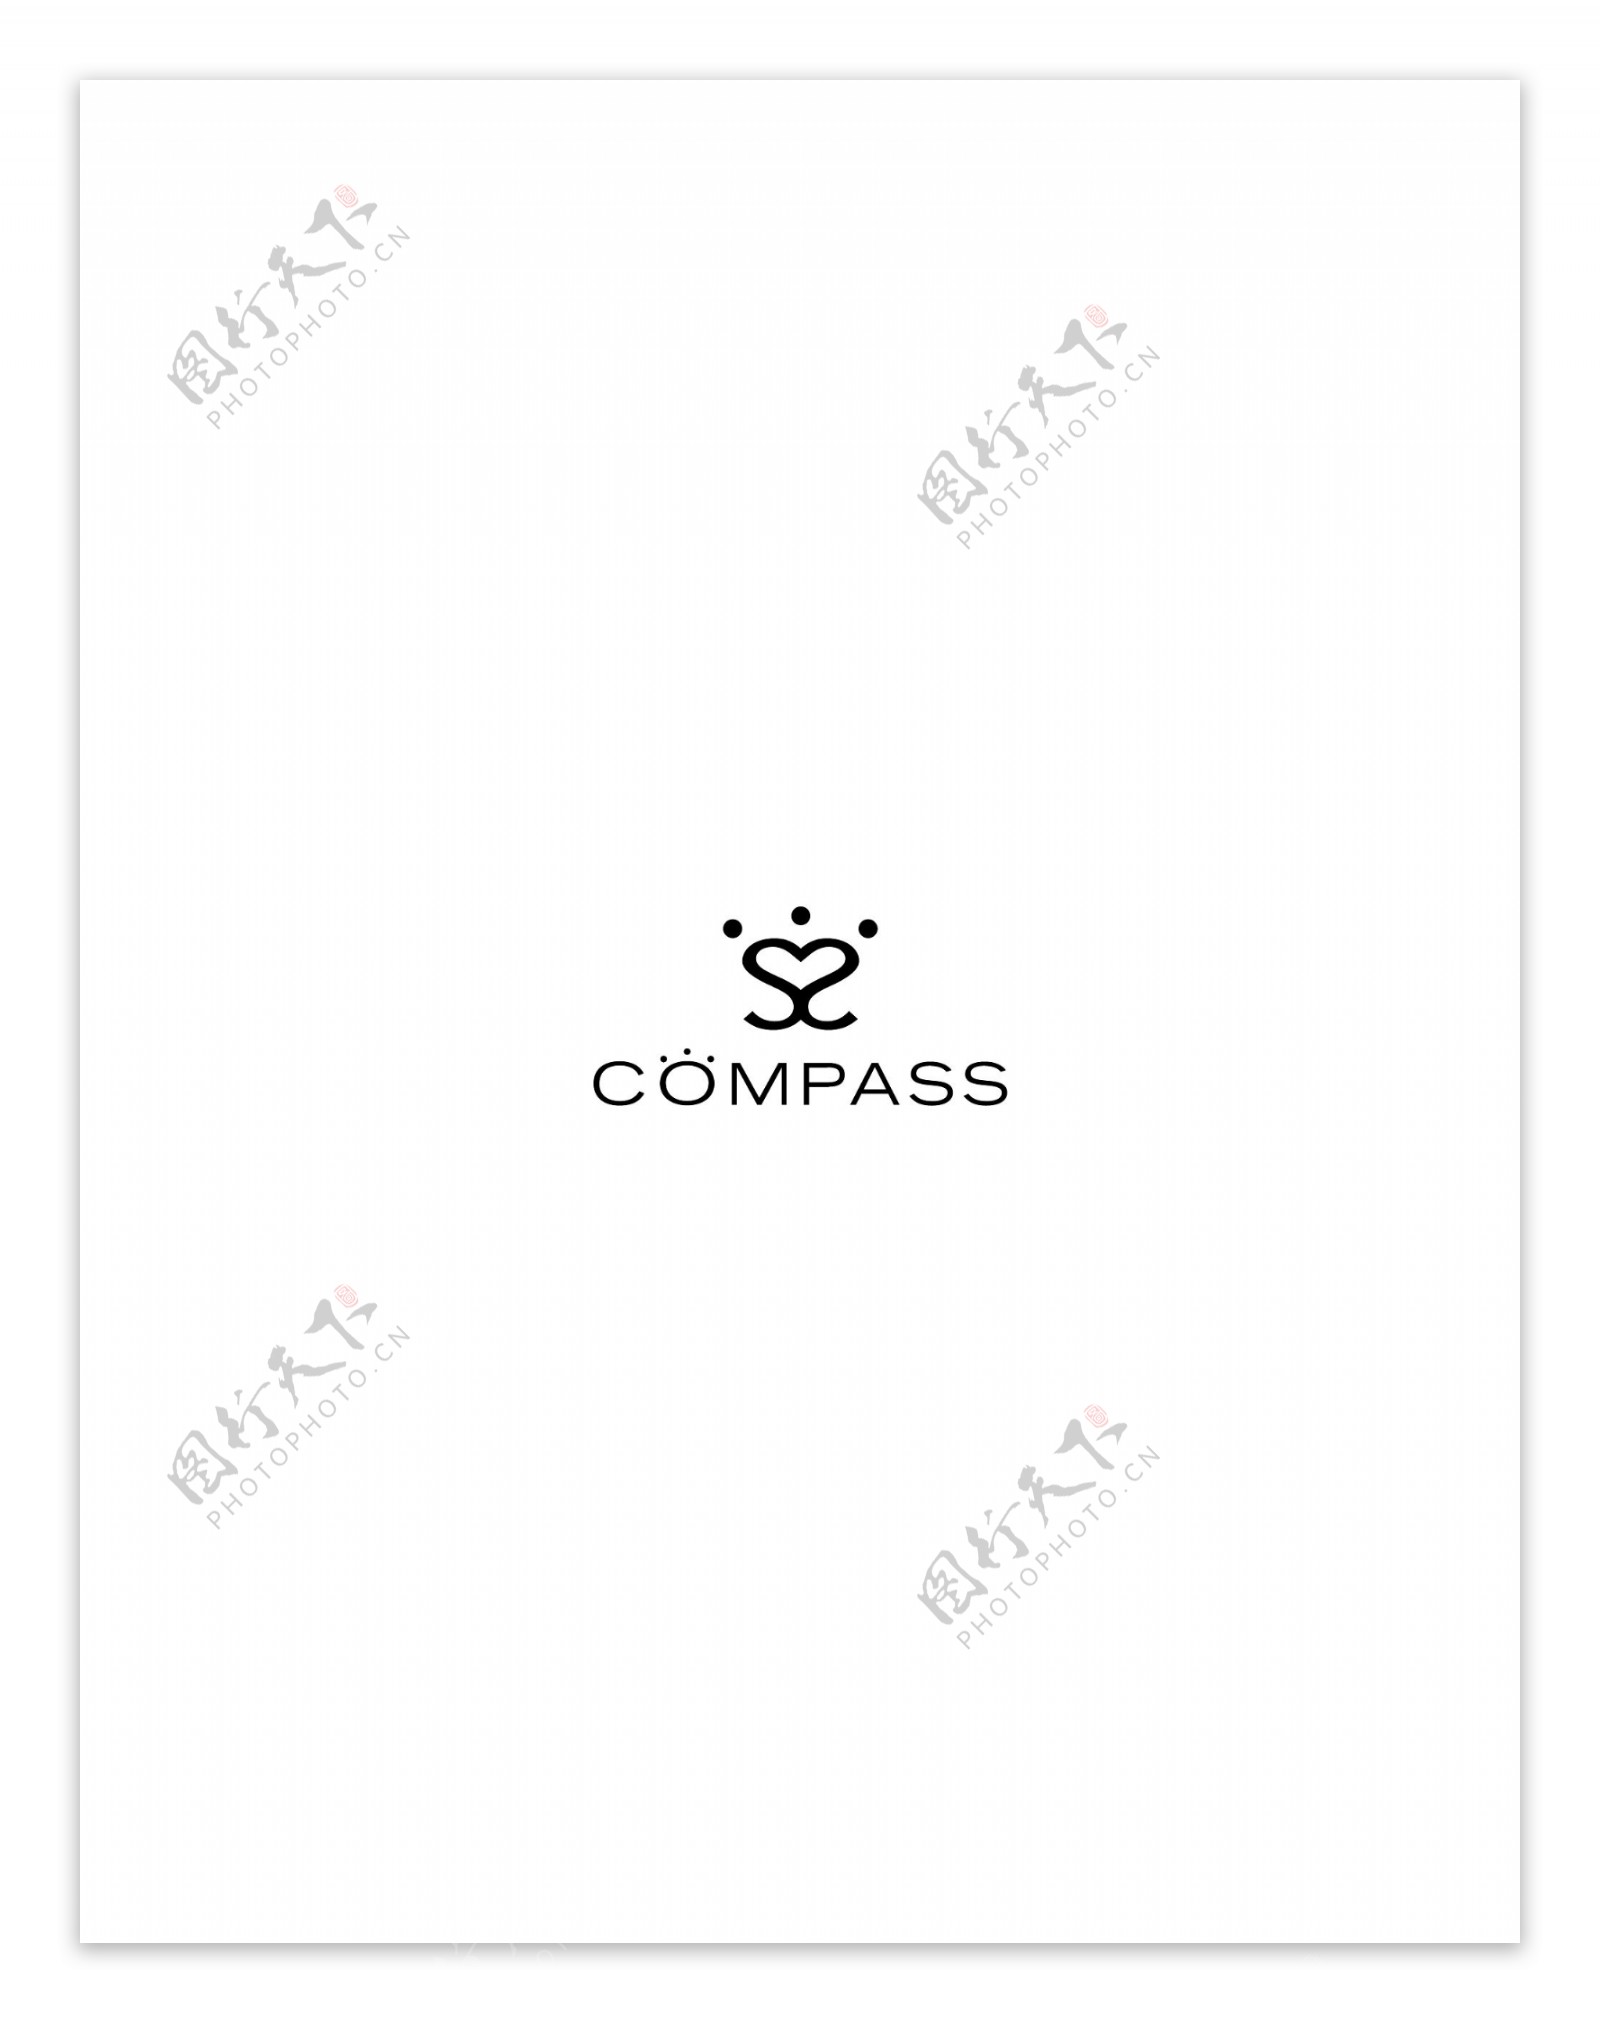 Compasslogo设计欣赏Compass服饰品牌标志下载标志设计欣赏